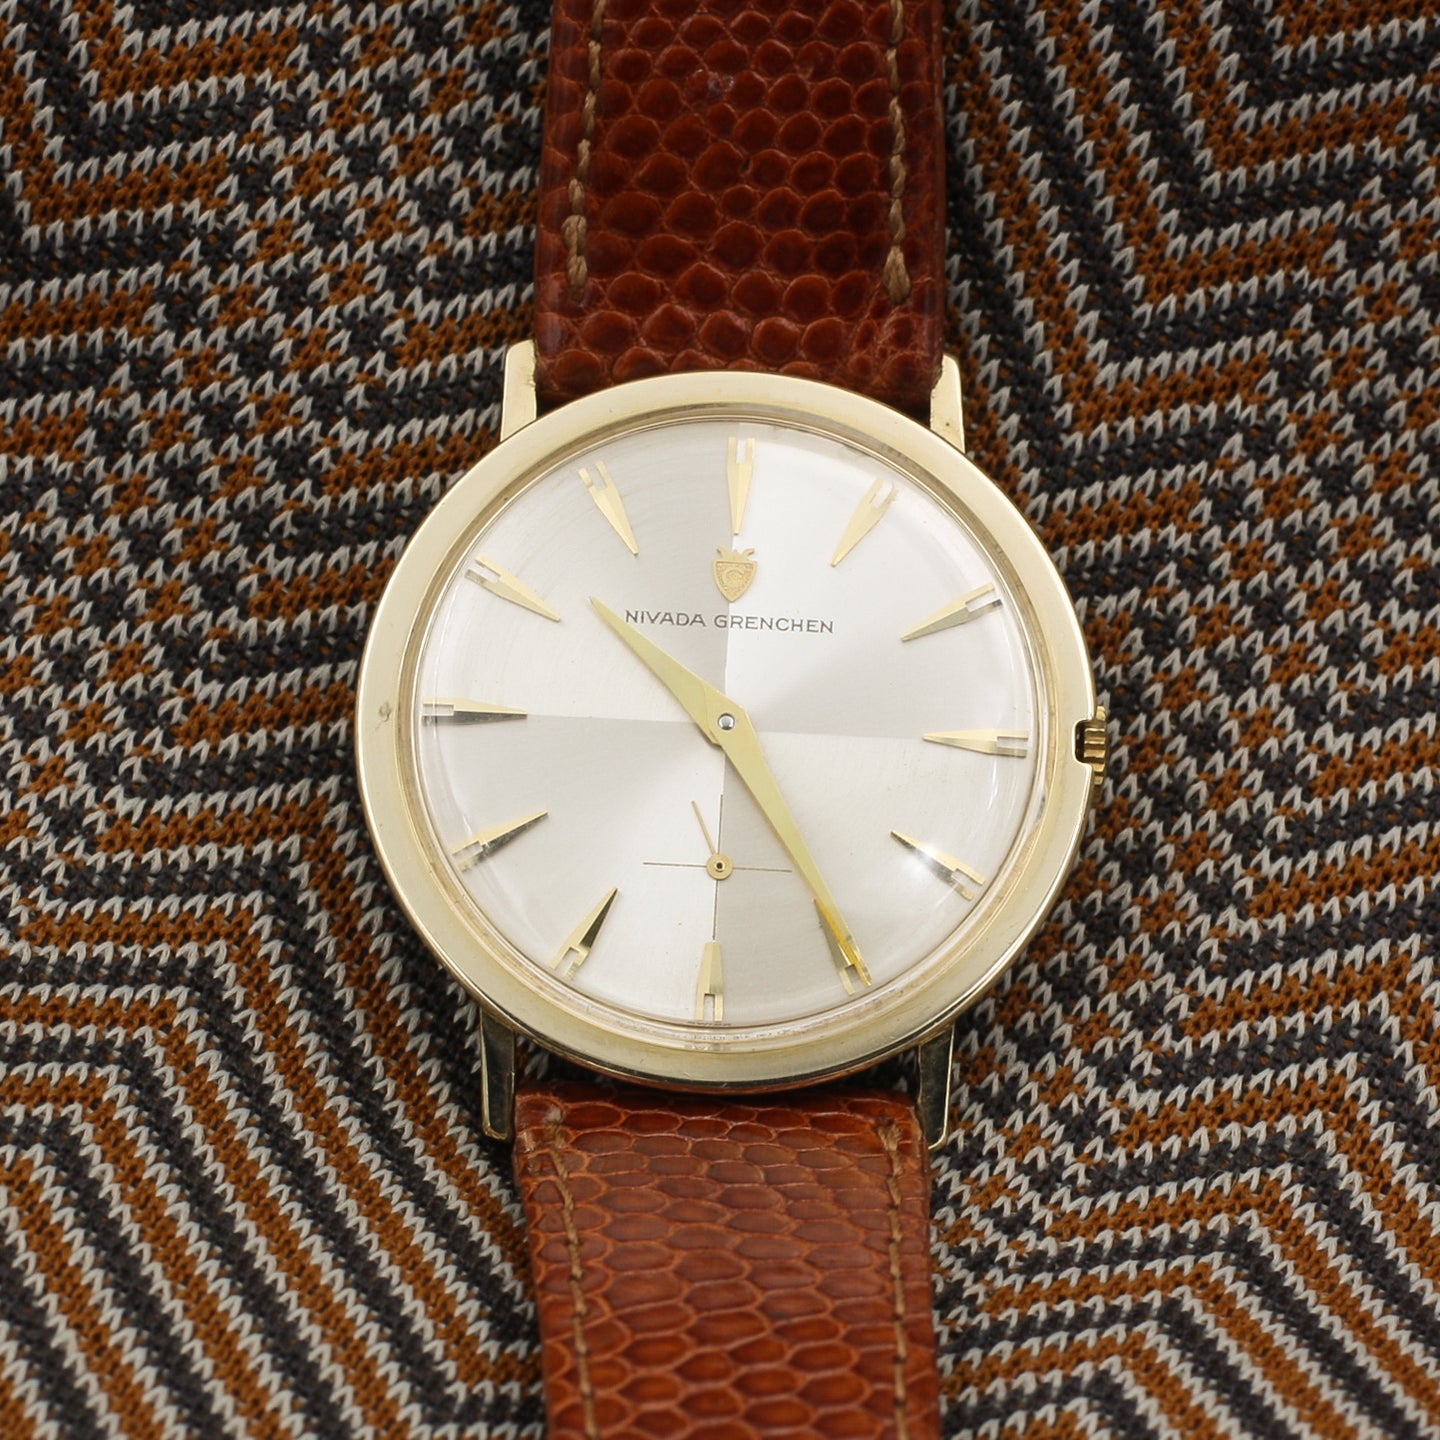 Nivada Grenchen Gold Wristwatch c1960